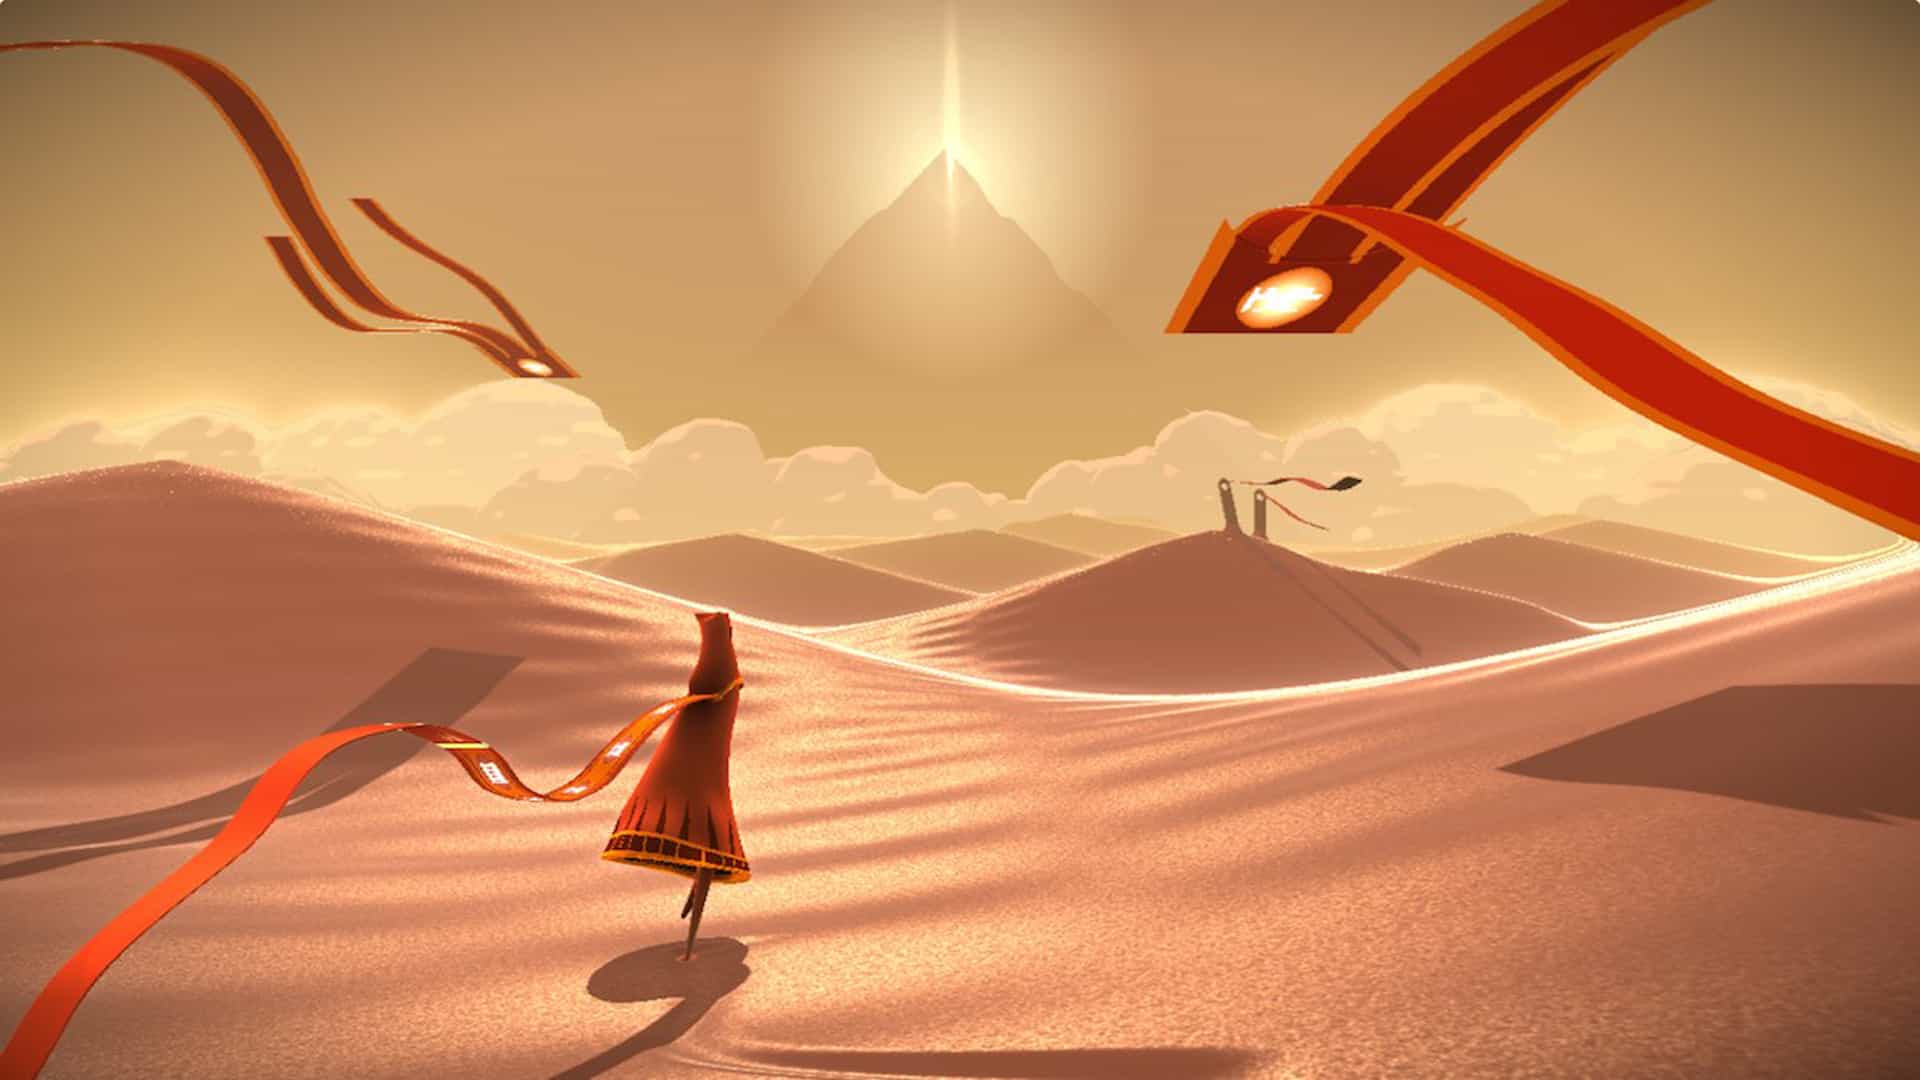 Full journey. Journey игра thatgamecompany. Journey (игра, 2012). Джорни путешествие игра. Пустыня из игры Джорни.